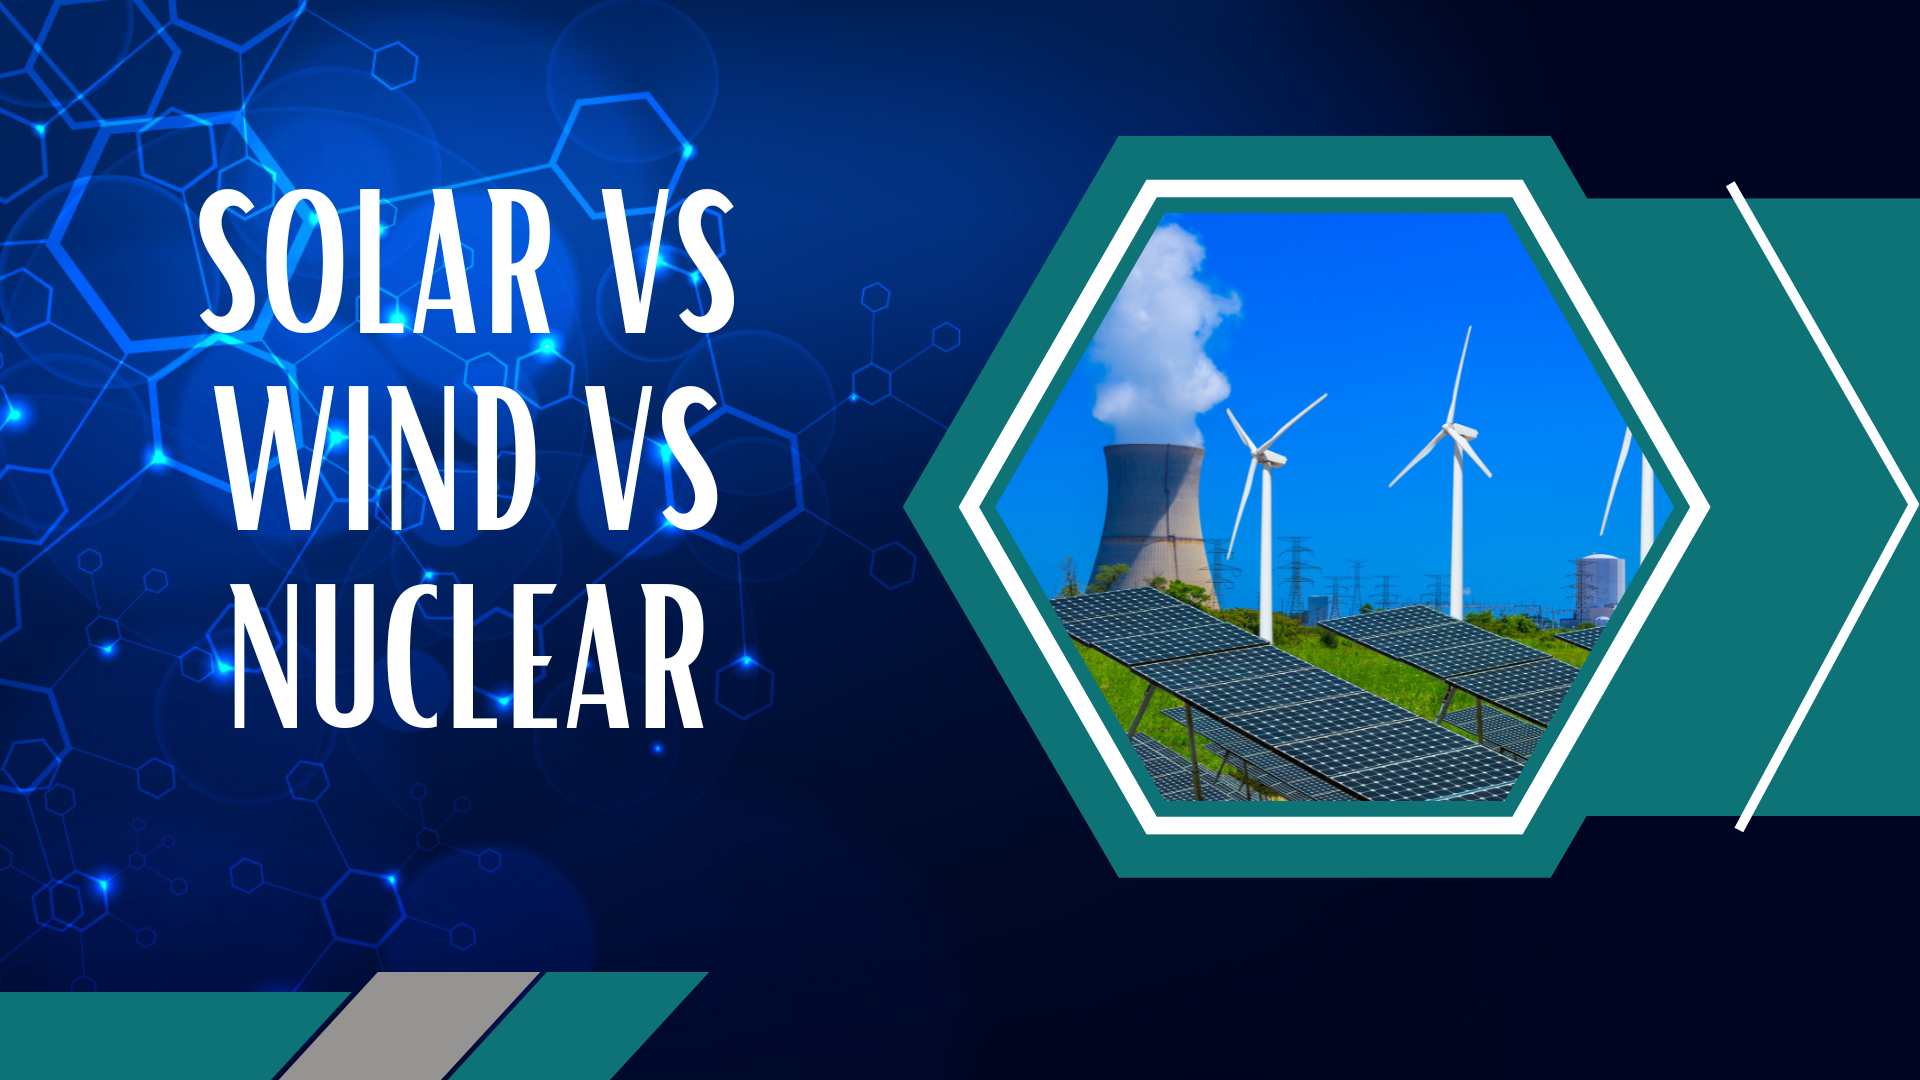 Solar vs Wind vs Nuclear